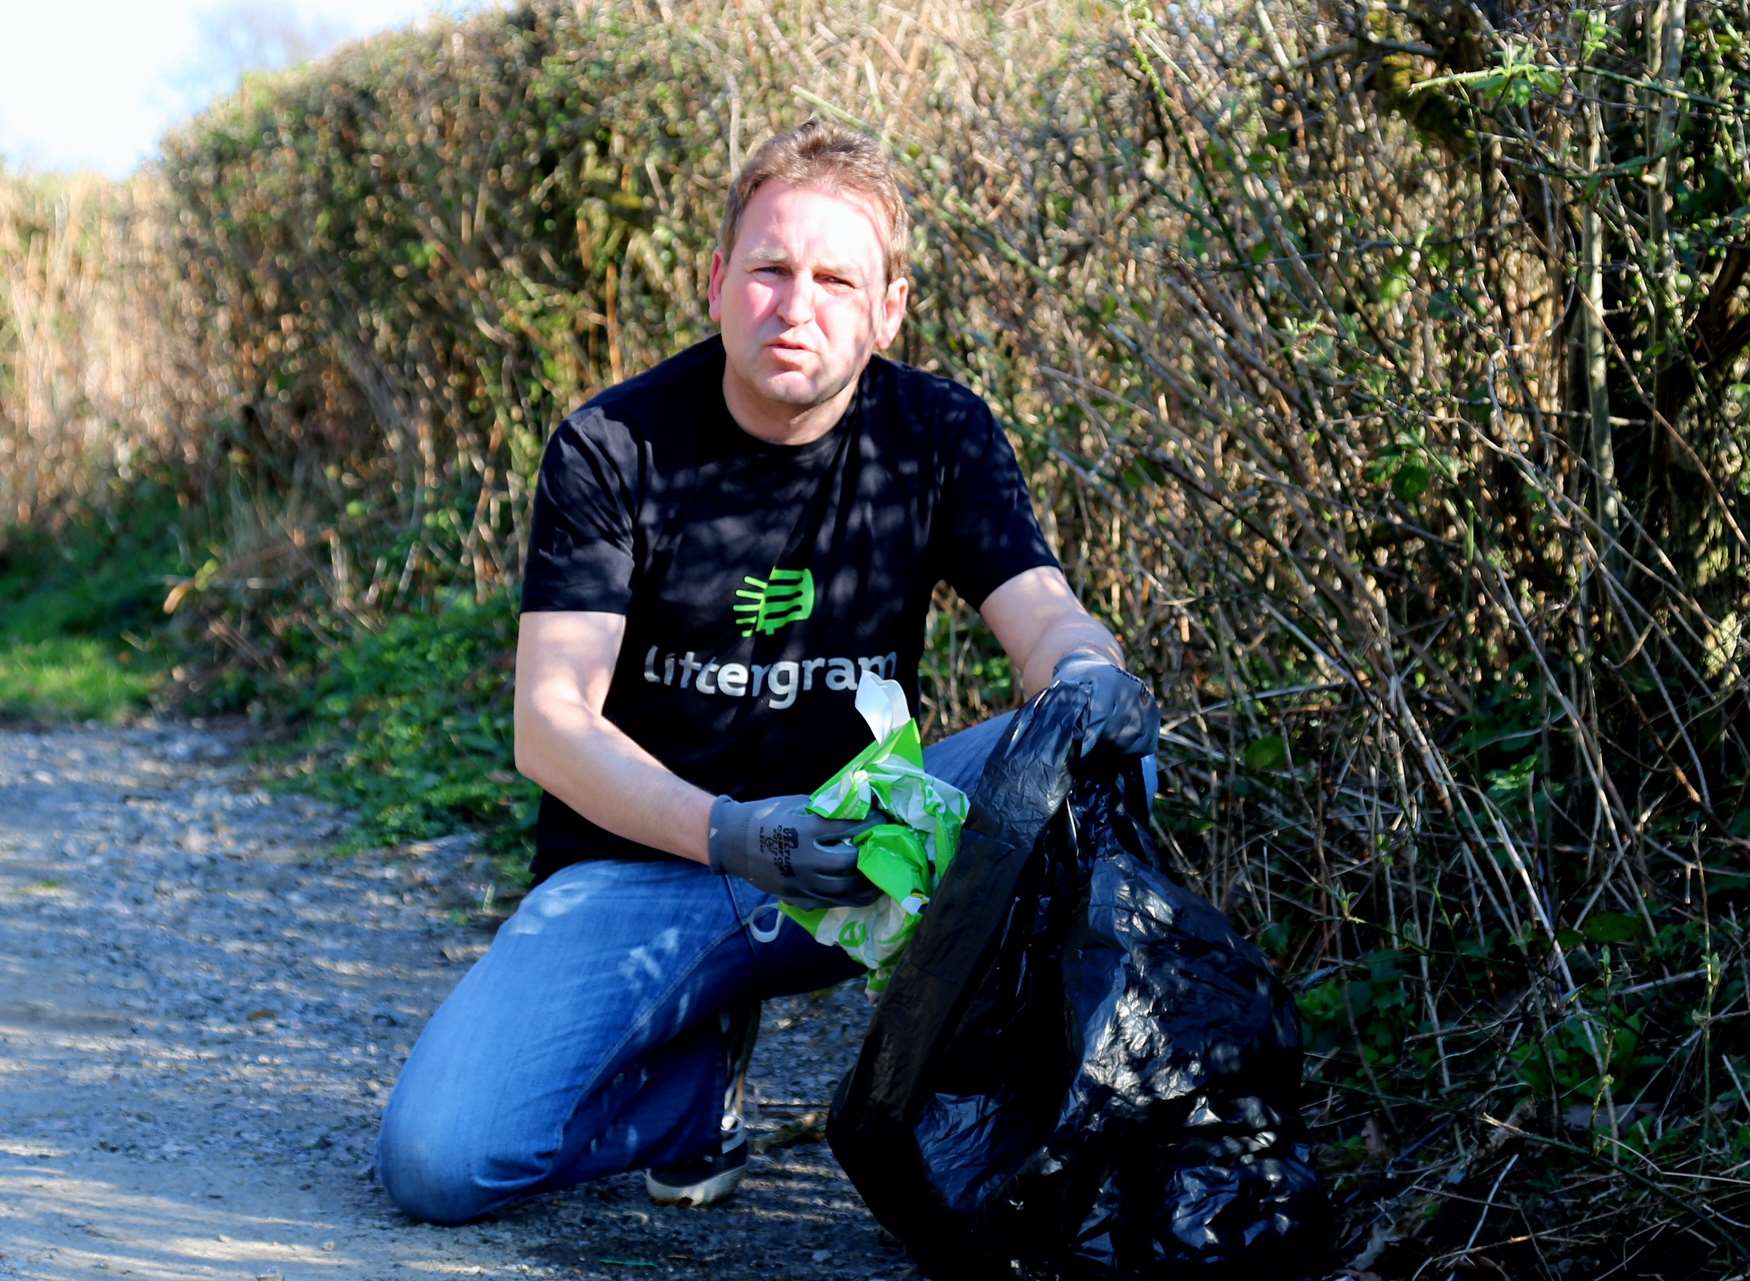 Danny Lucas, anti-litter campaigner and creator of LitterGram.